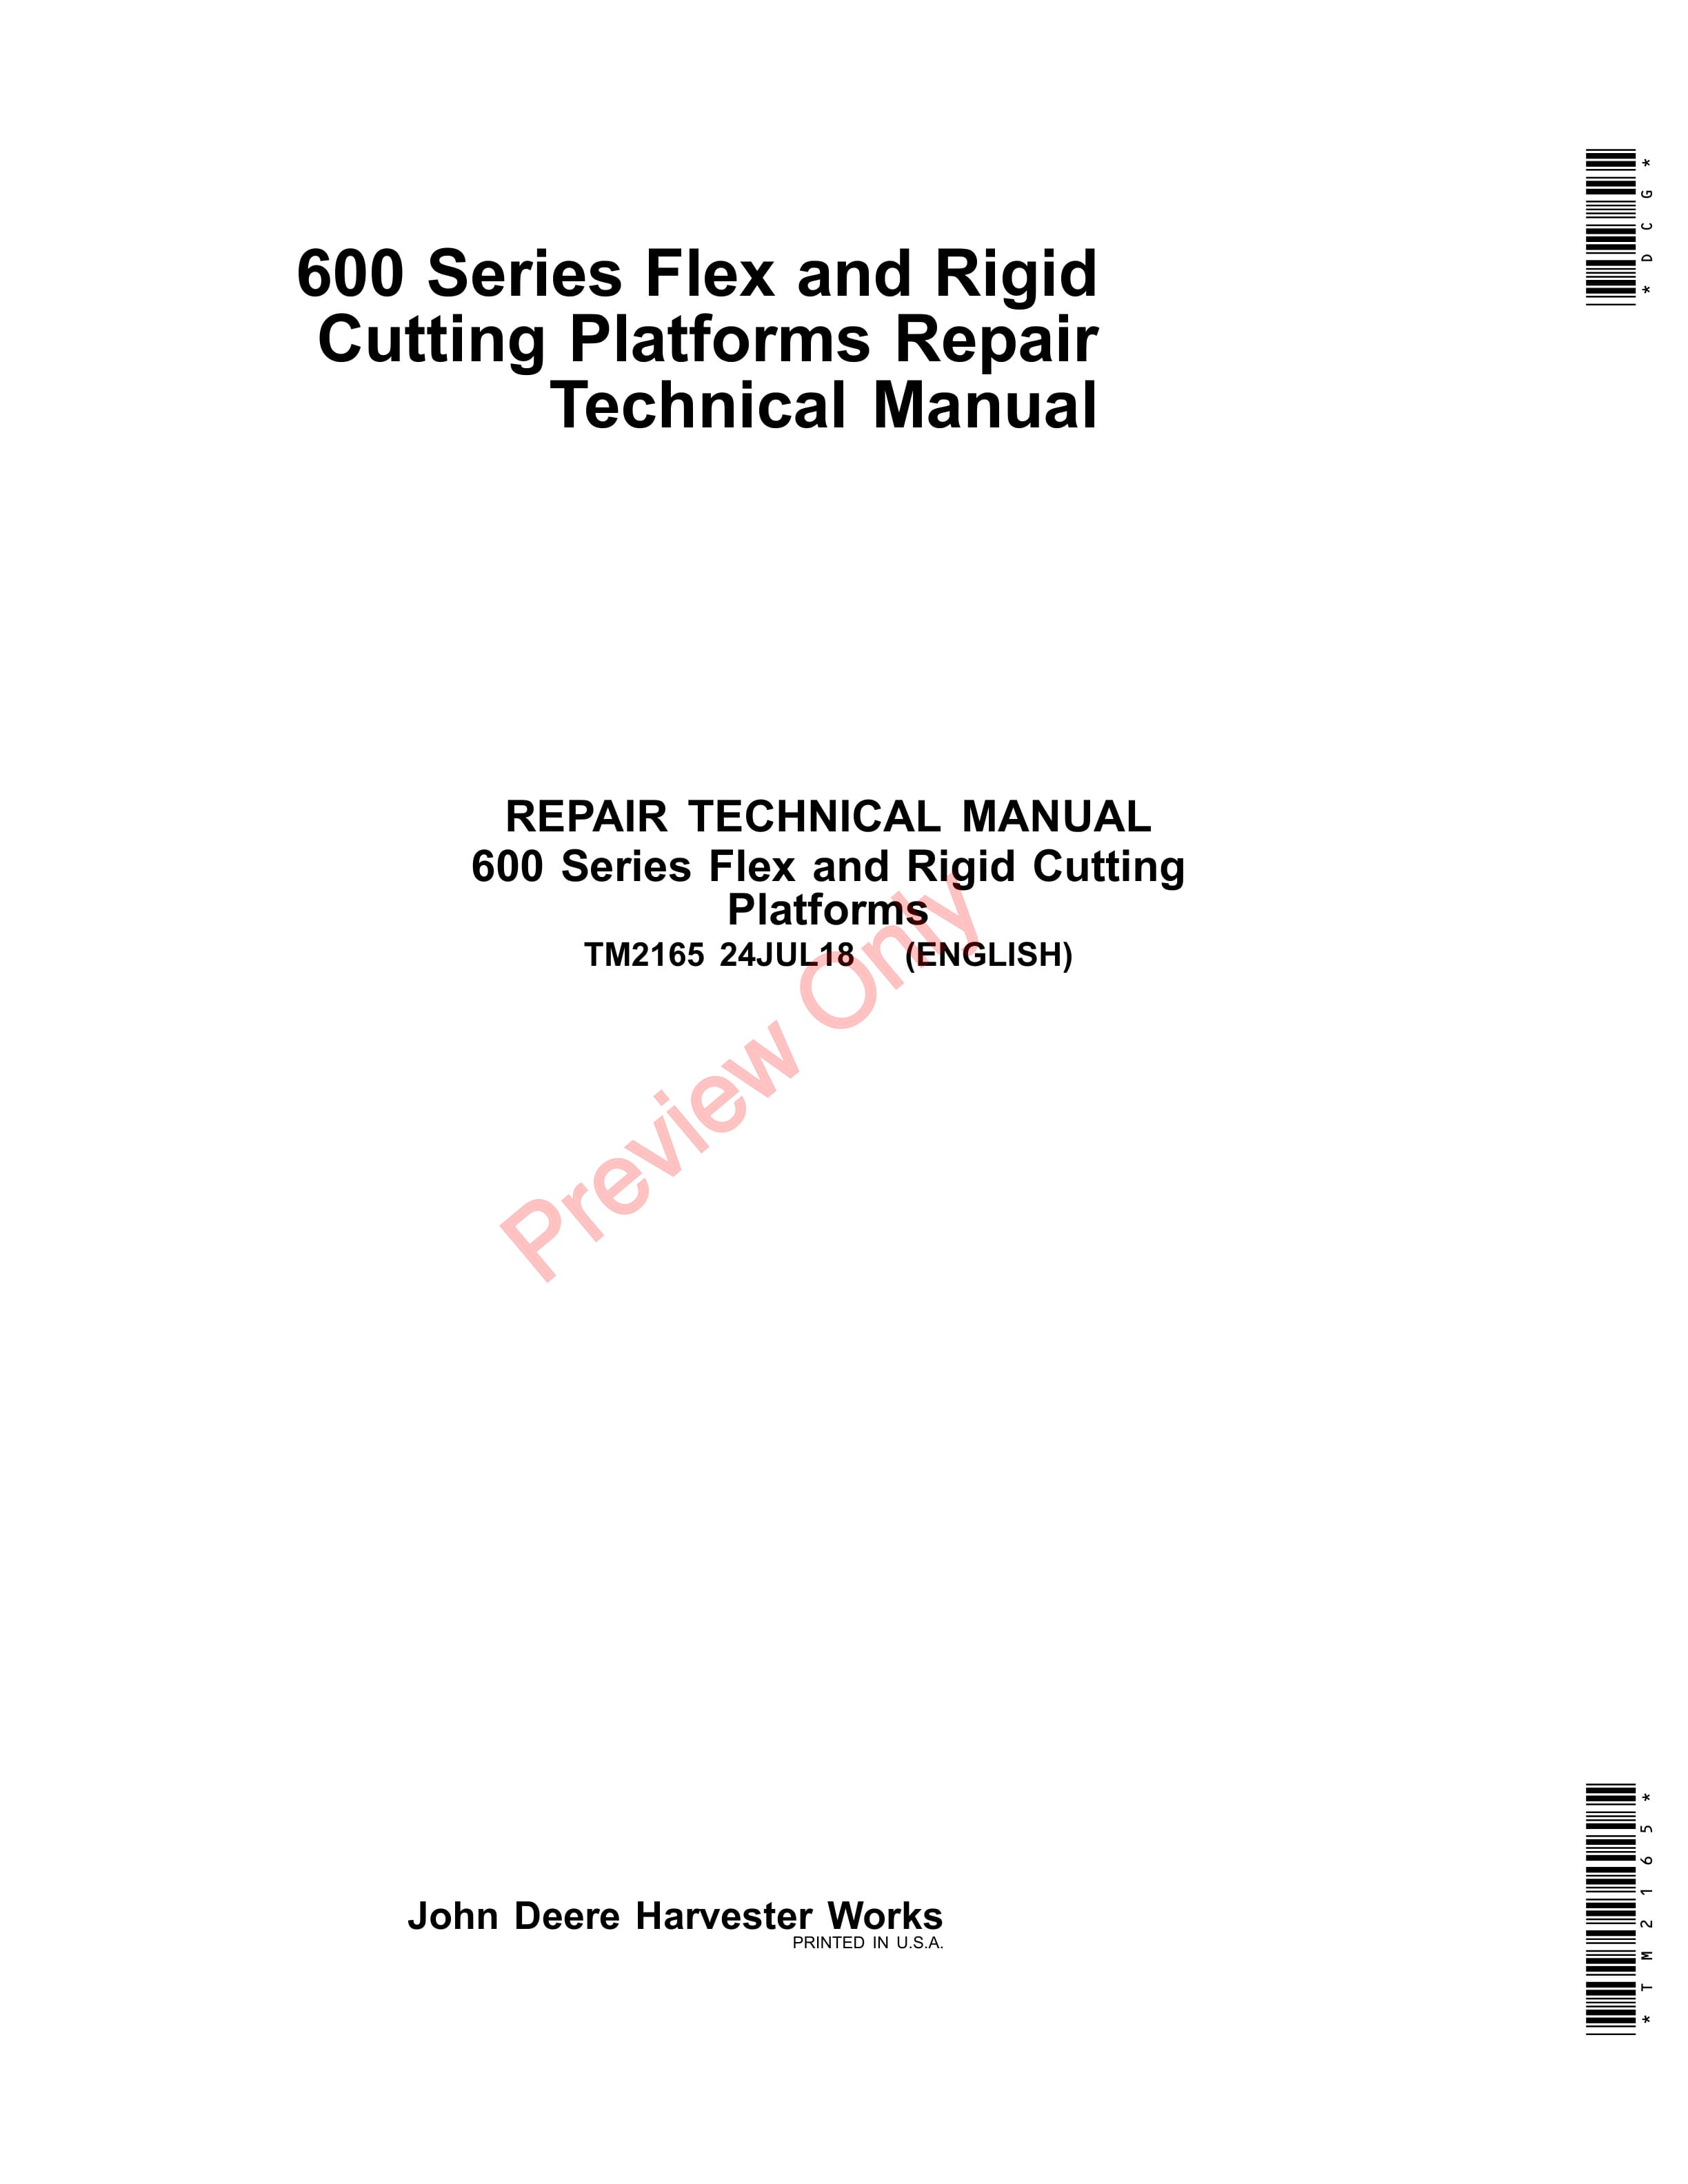 John Deere 600 Series Flex and Rigid Cutting Platforms Repair Technical Manual TM2165 24JUL18-1